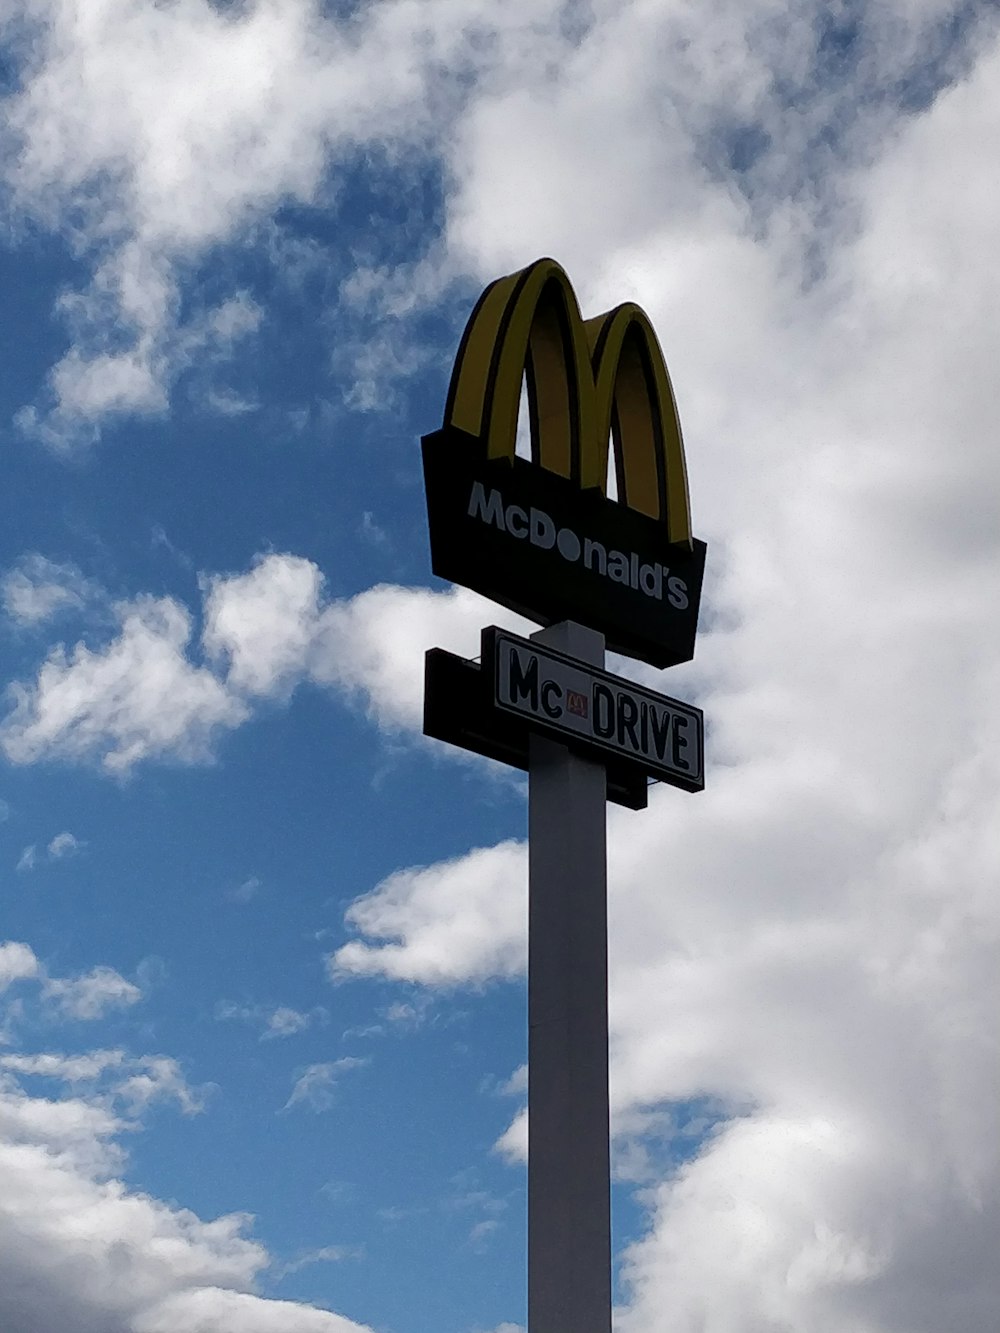 a mcdonald's and mcdonald drive sign under a cloudy blue sky